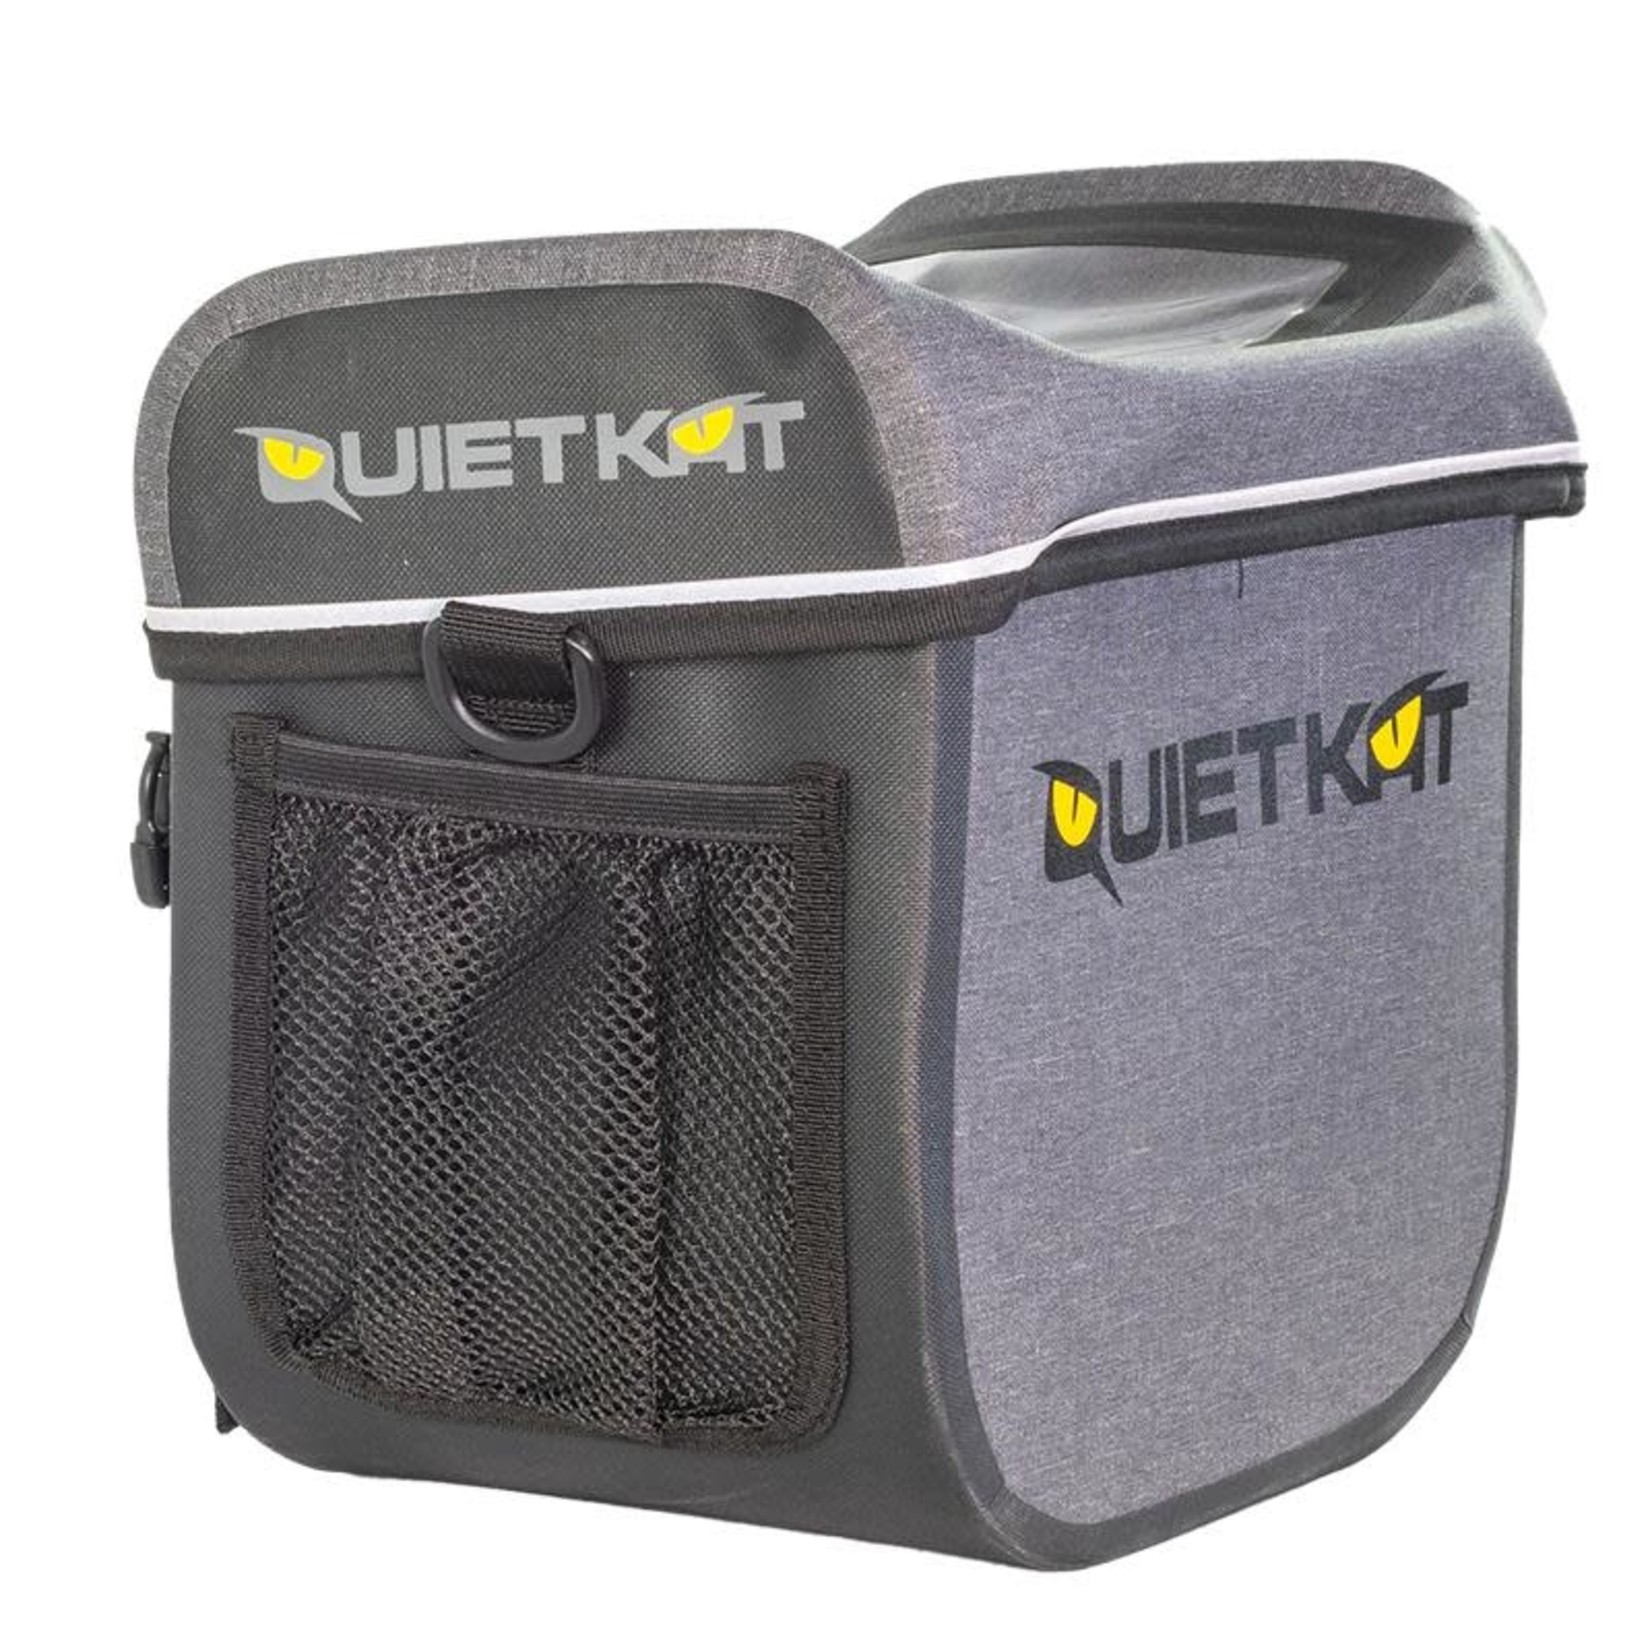 Quiet Kat handle bar bag